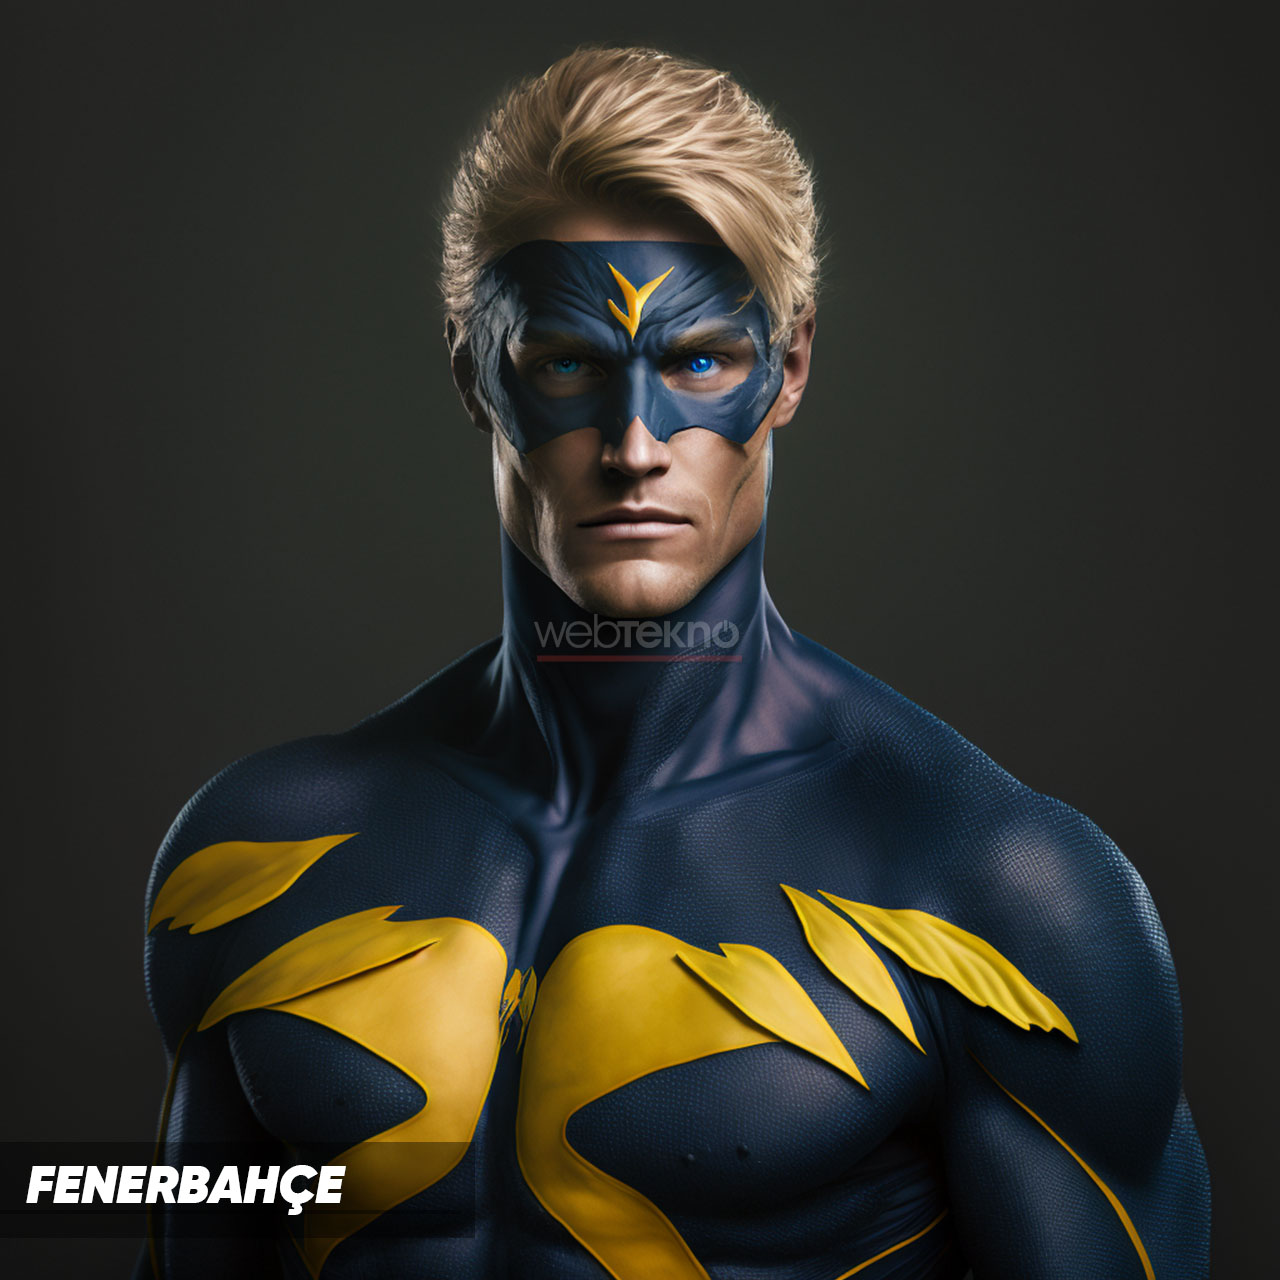 If Fenerbahce was a superhero